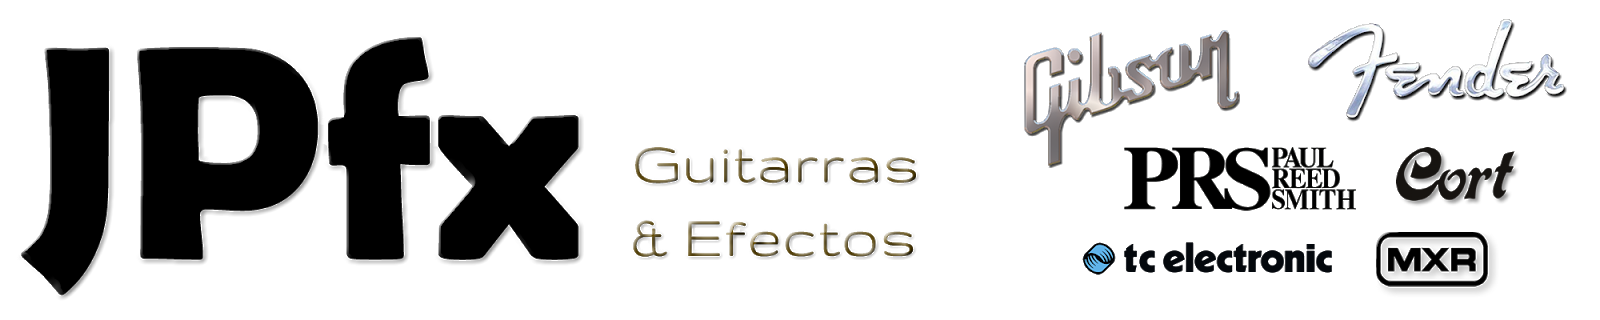 JPfx - Guitarras & Efectos